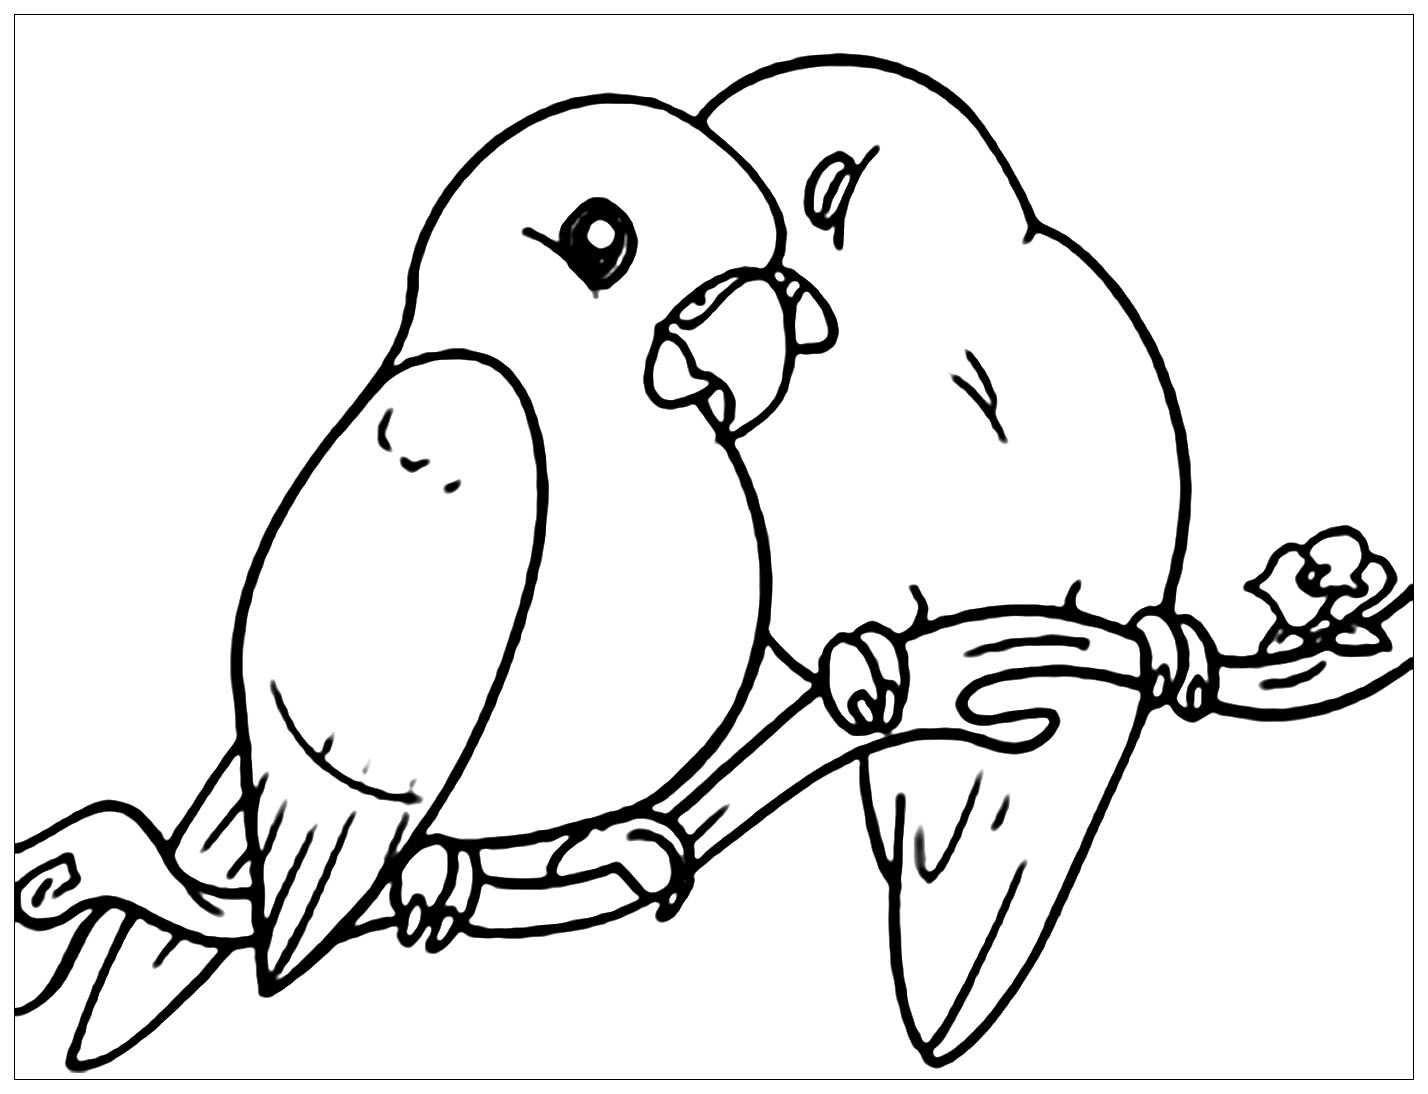 Hand-drawn small bird colibri sketch art Vector Image